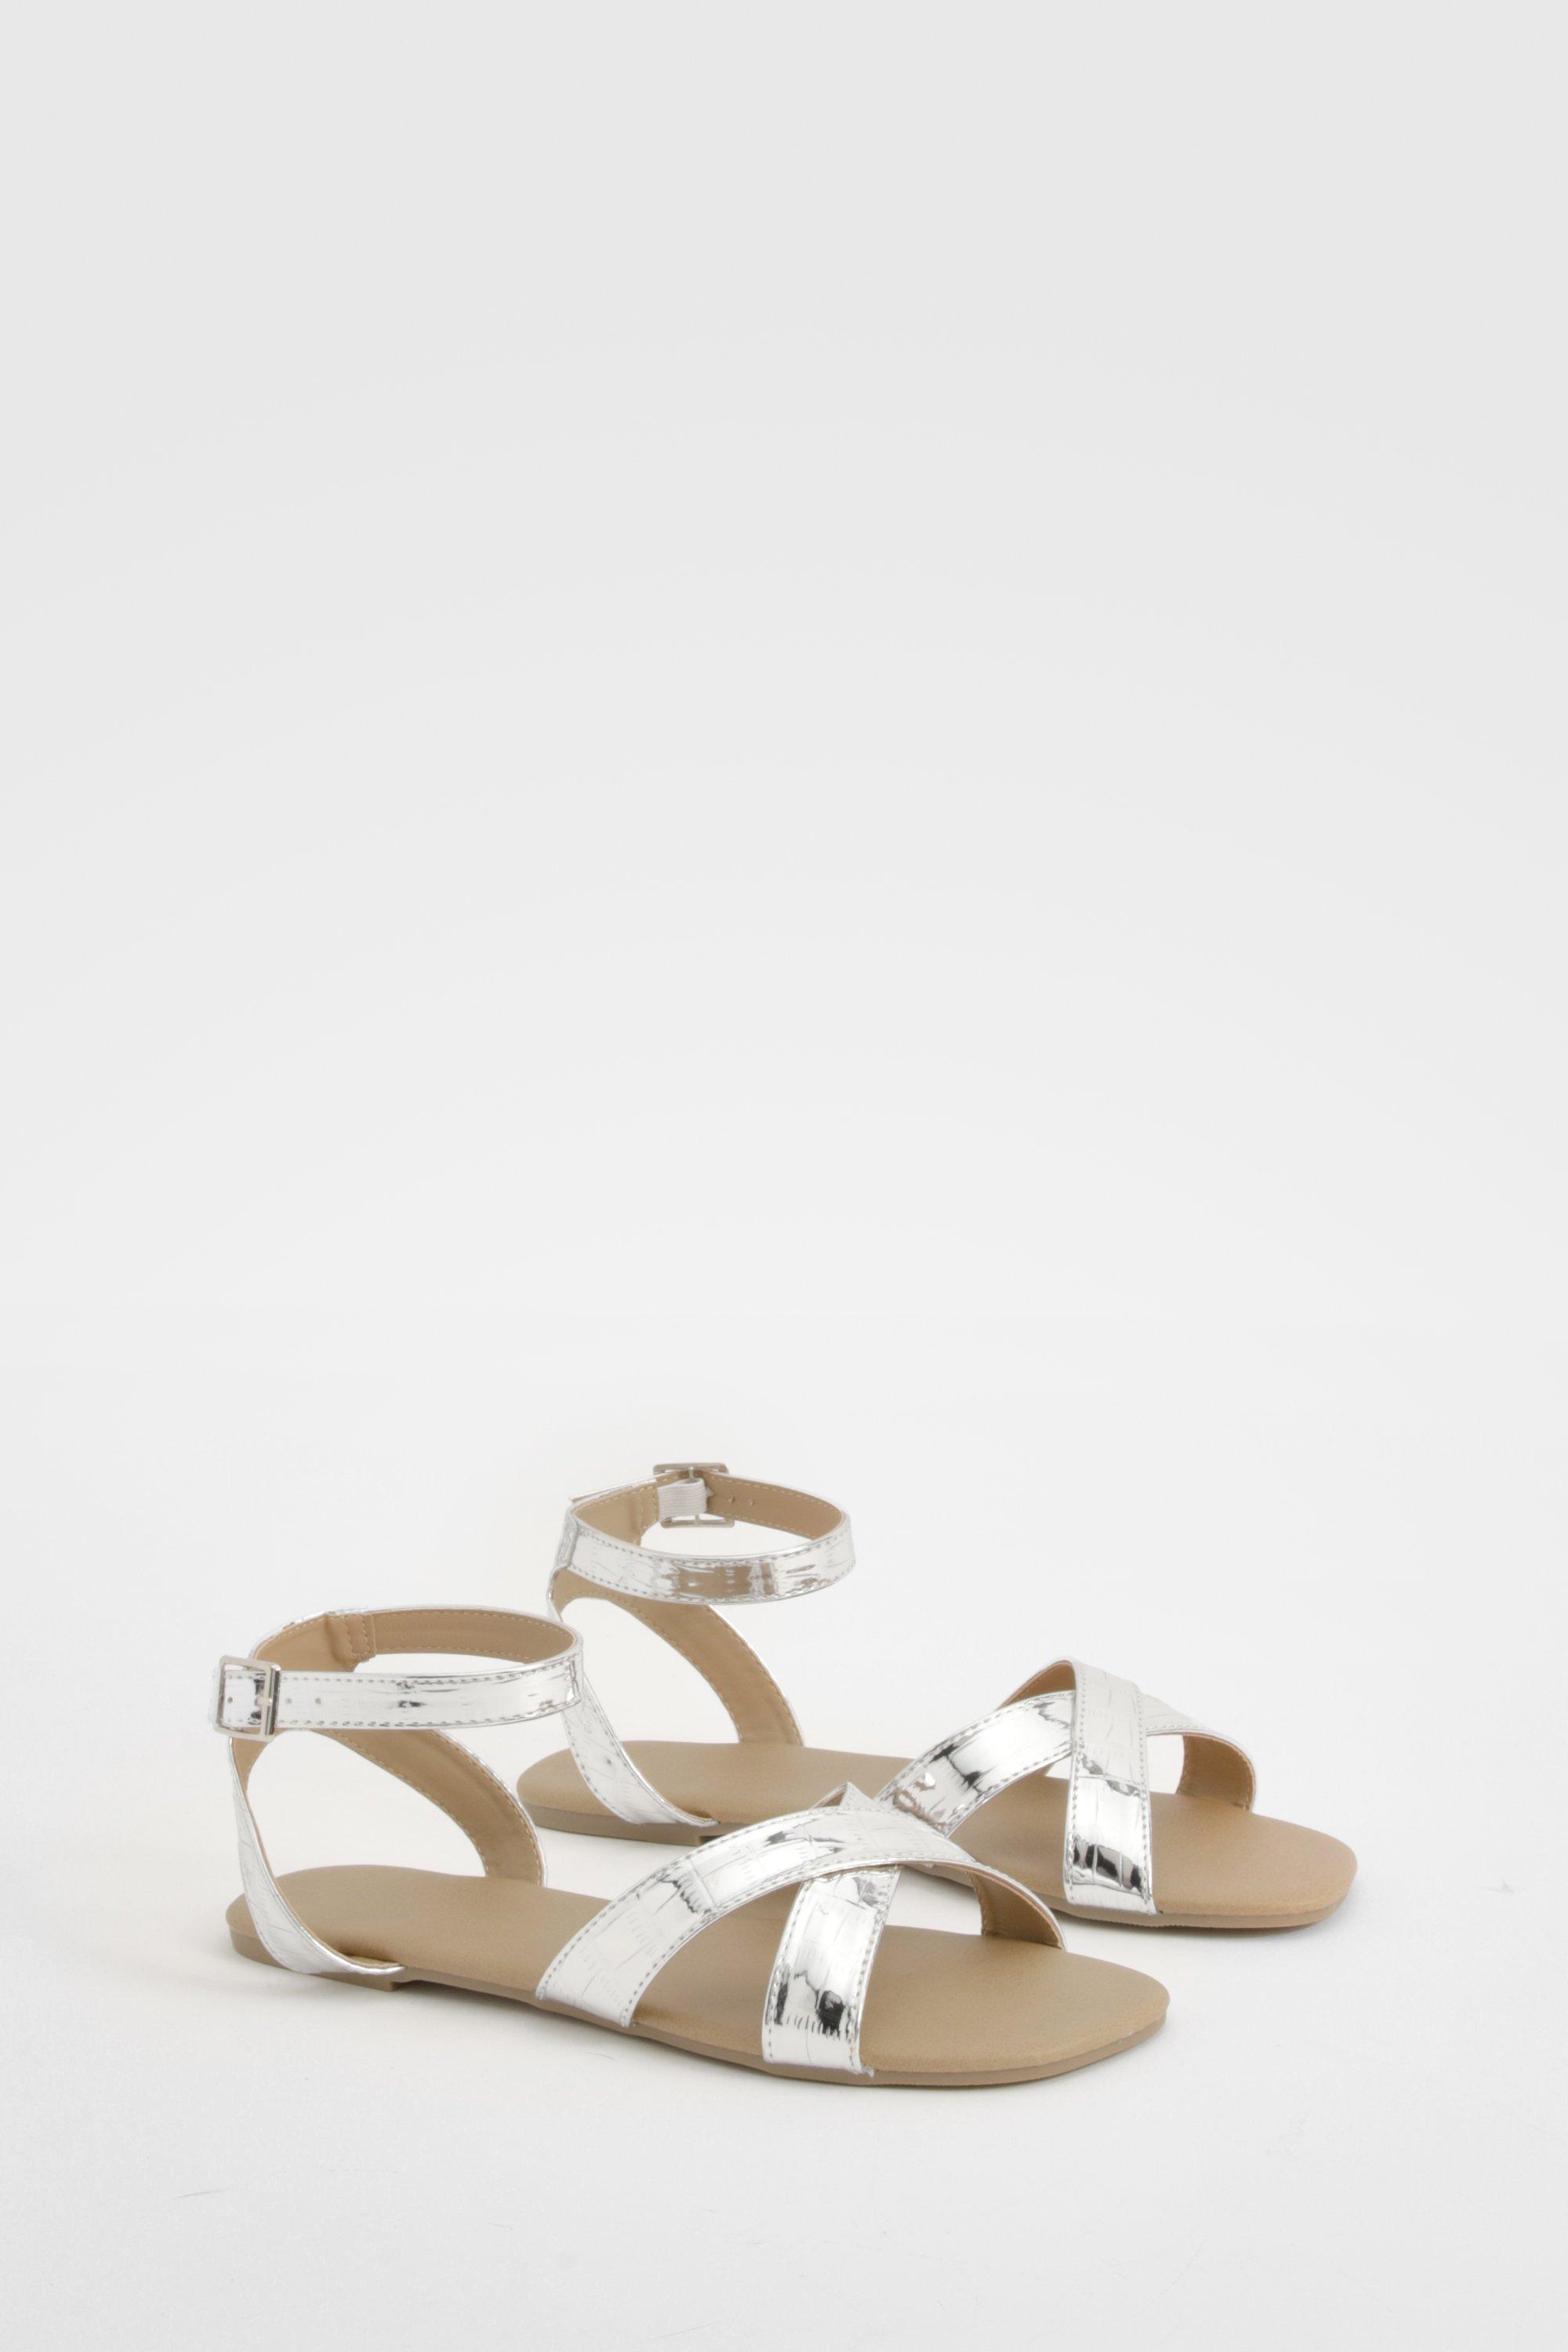 Image of Crossover Basic Flat Sandals, Grigio